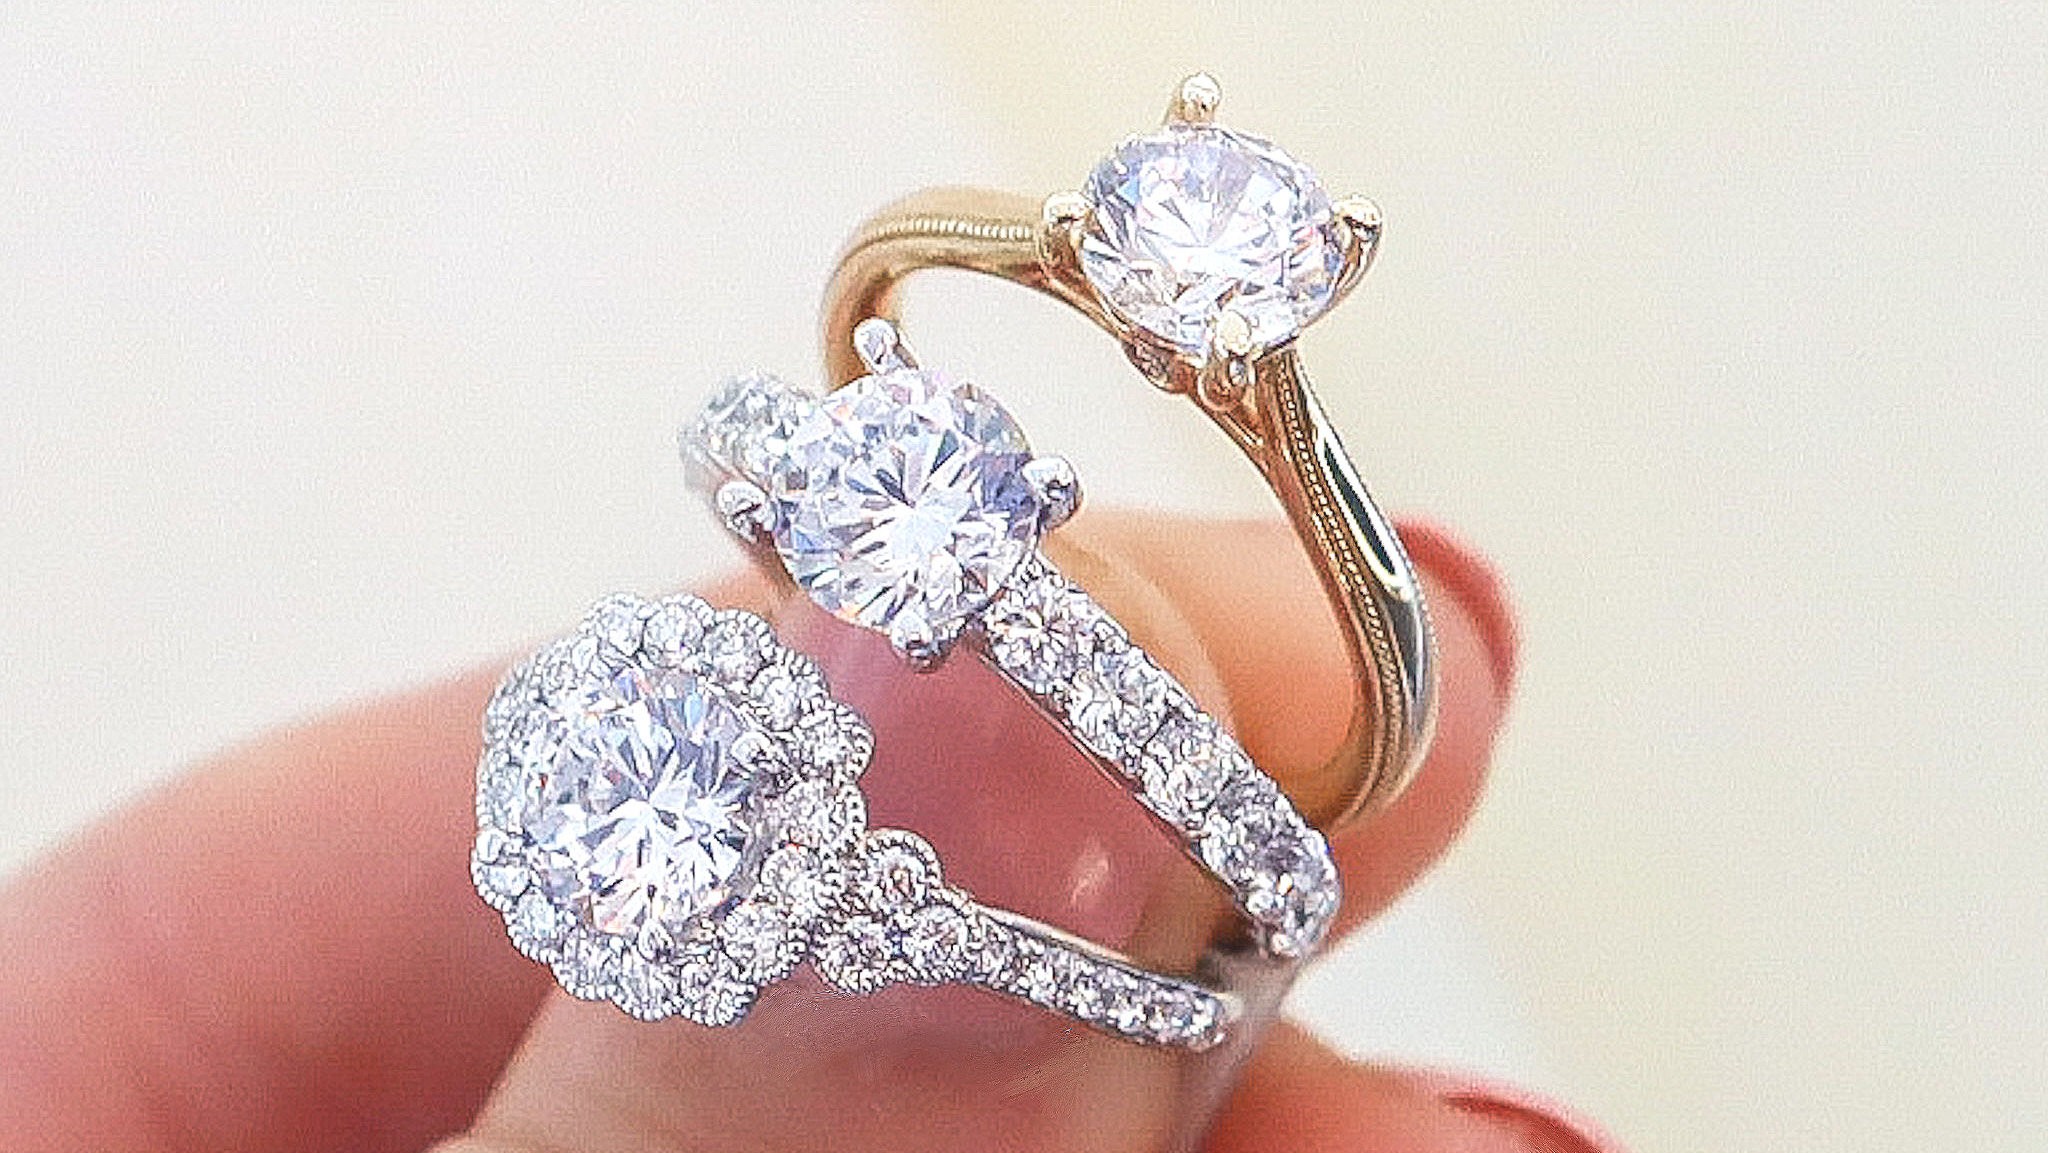 Fana Engagement Rings